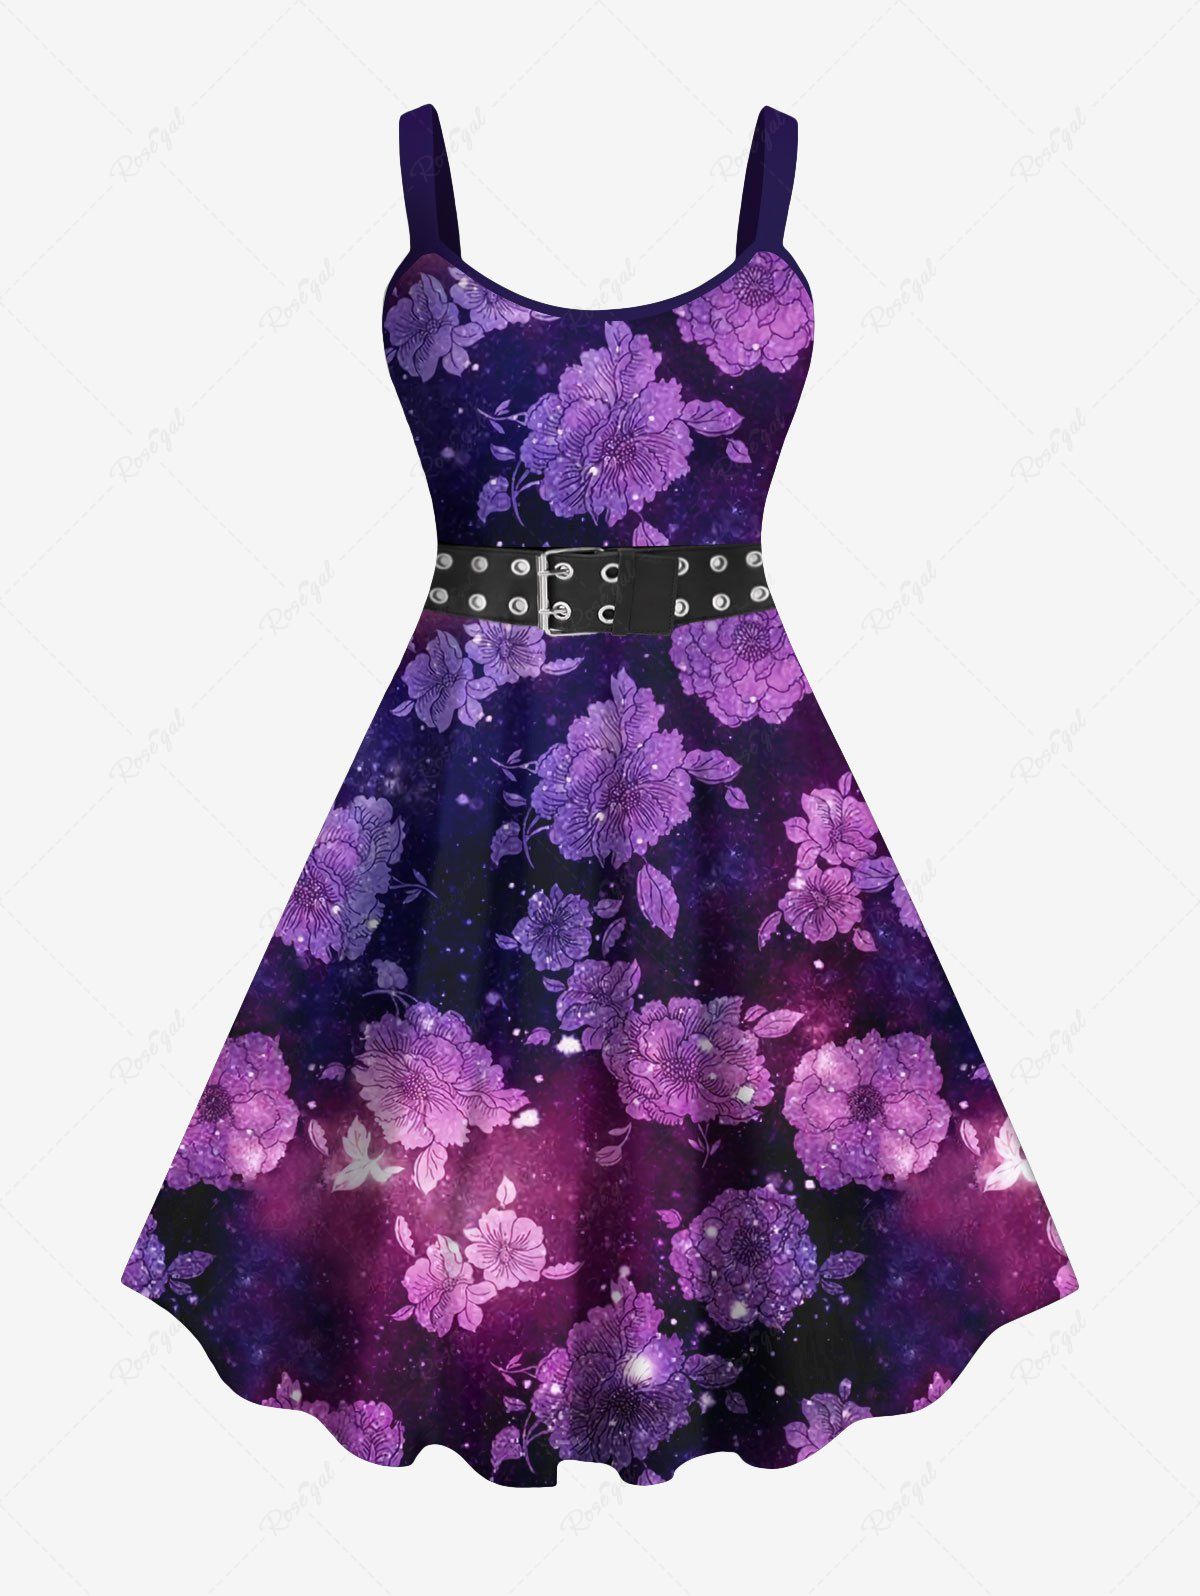 Outfit Plus Size Flowers Leaf Galaxy Glitter Sparkling Sequin Grommets Buckle Belt 3D Print Tank Party Dress  